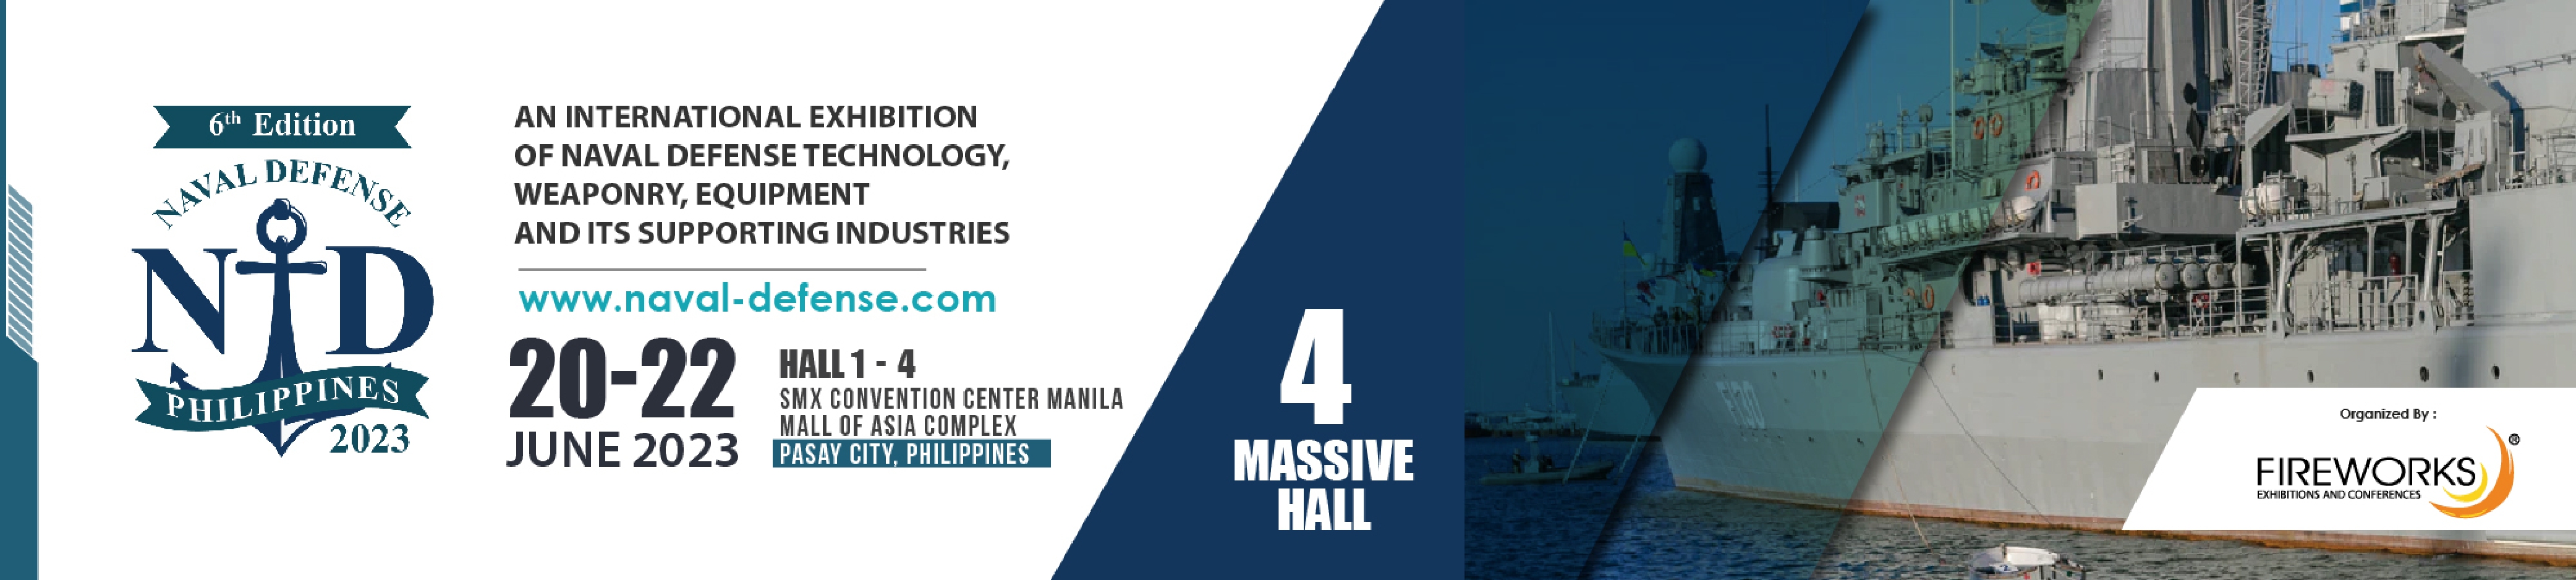 NAVAL - DEFENSE EXPO 2023, PASAY CITY, National Capital Region, Philippines